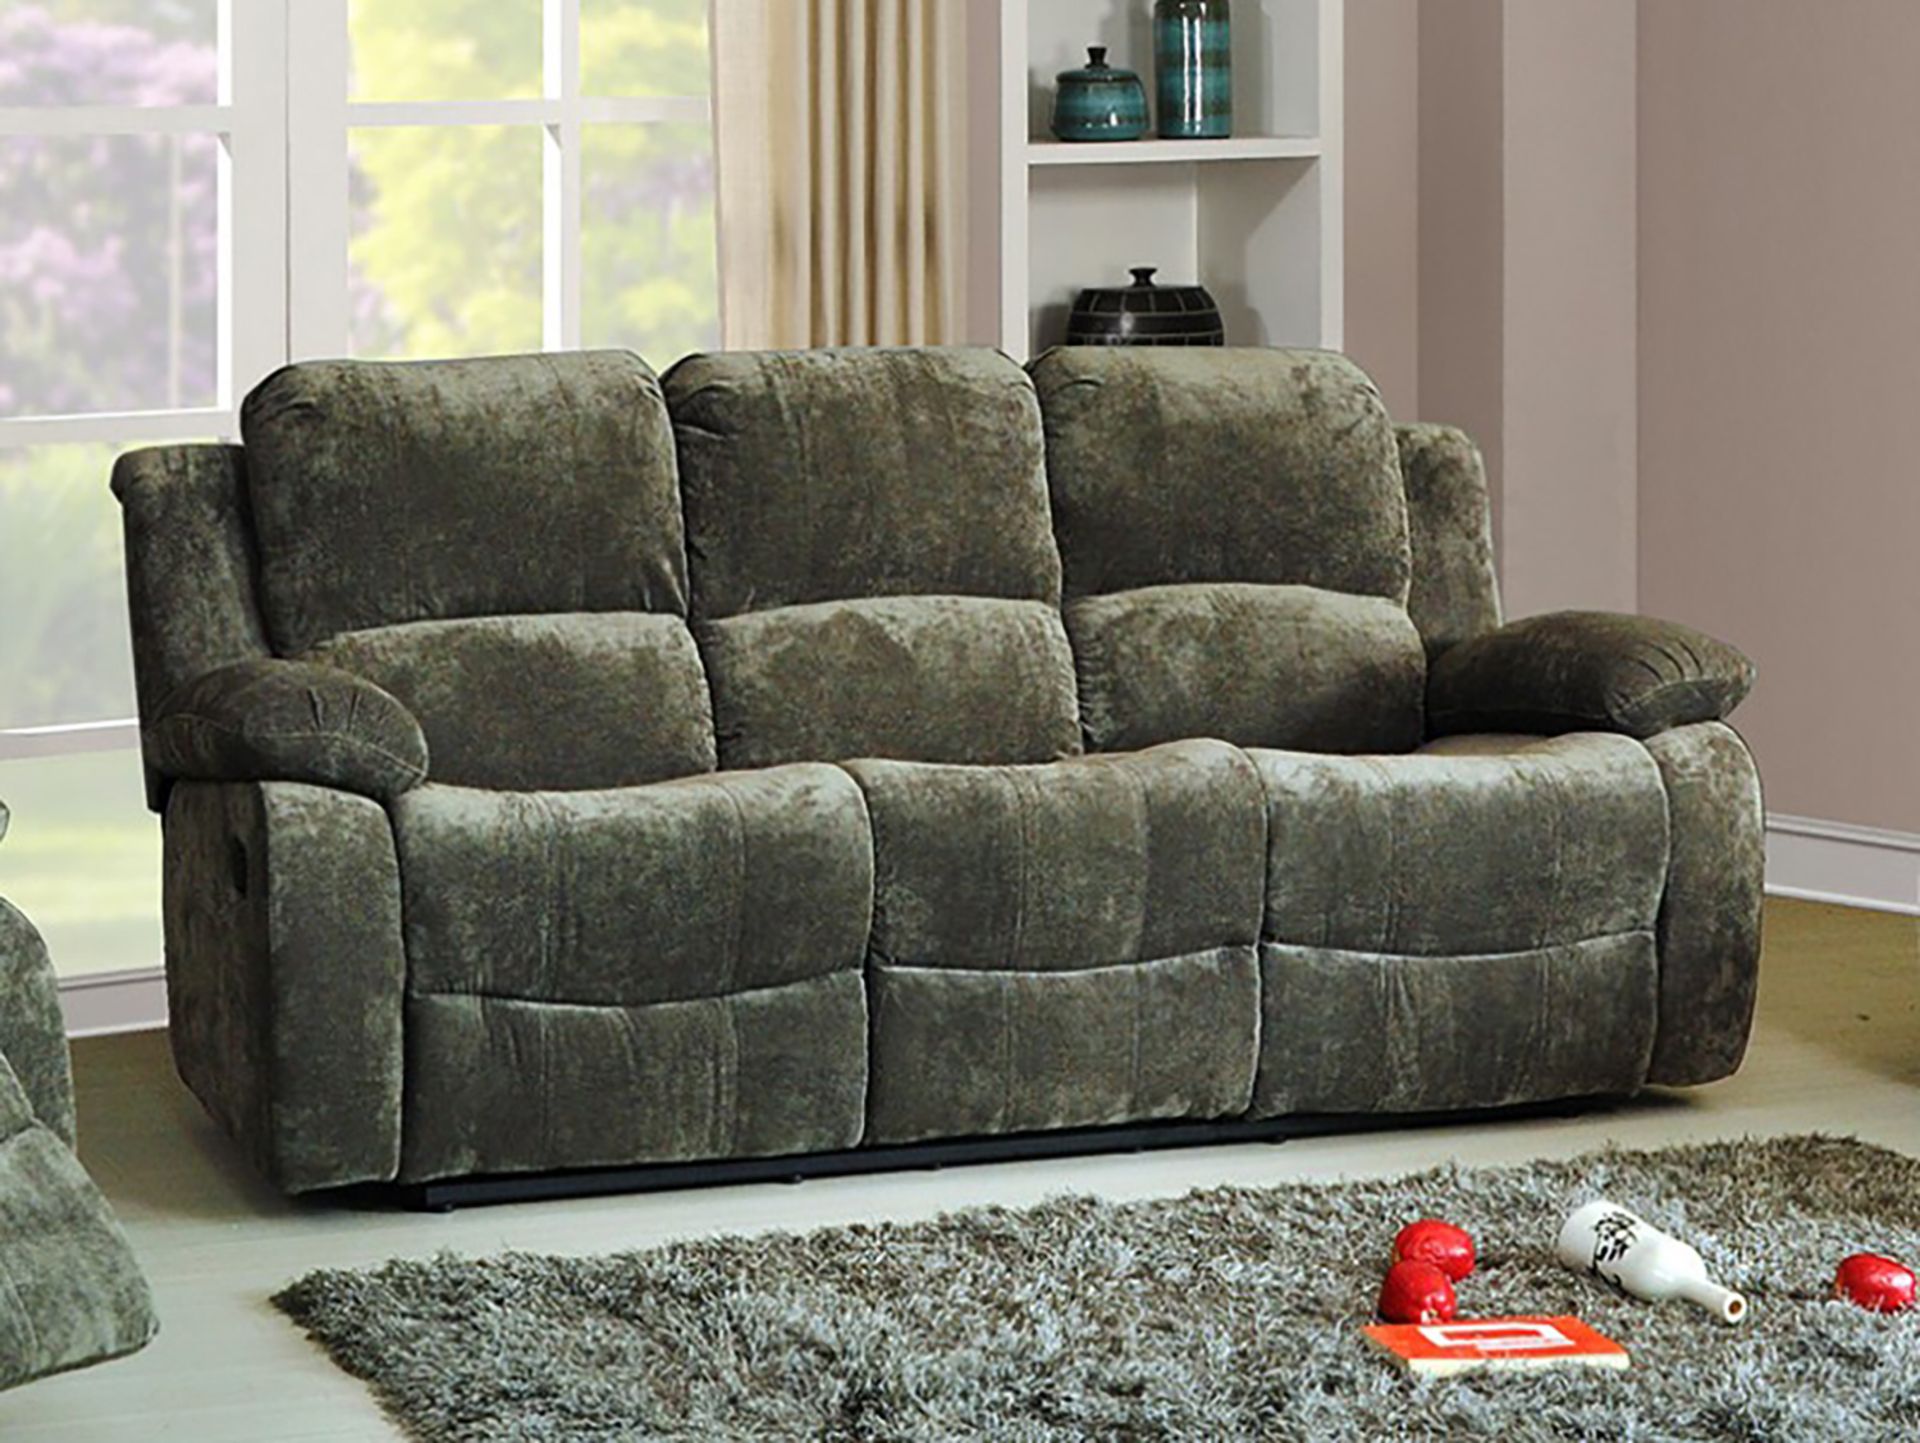 Supreme Valance charcoal grey fabric 3 seater reclining sofa